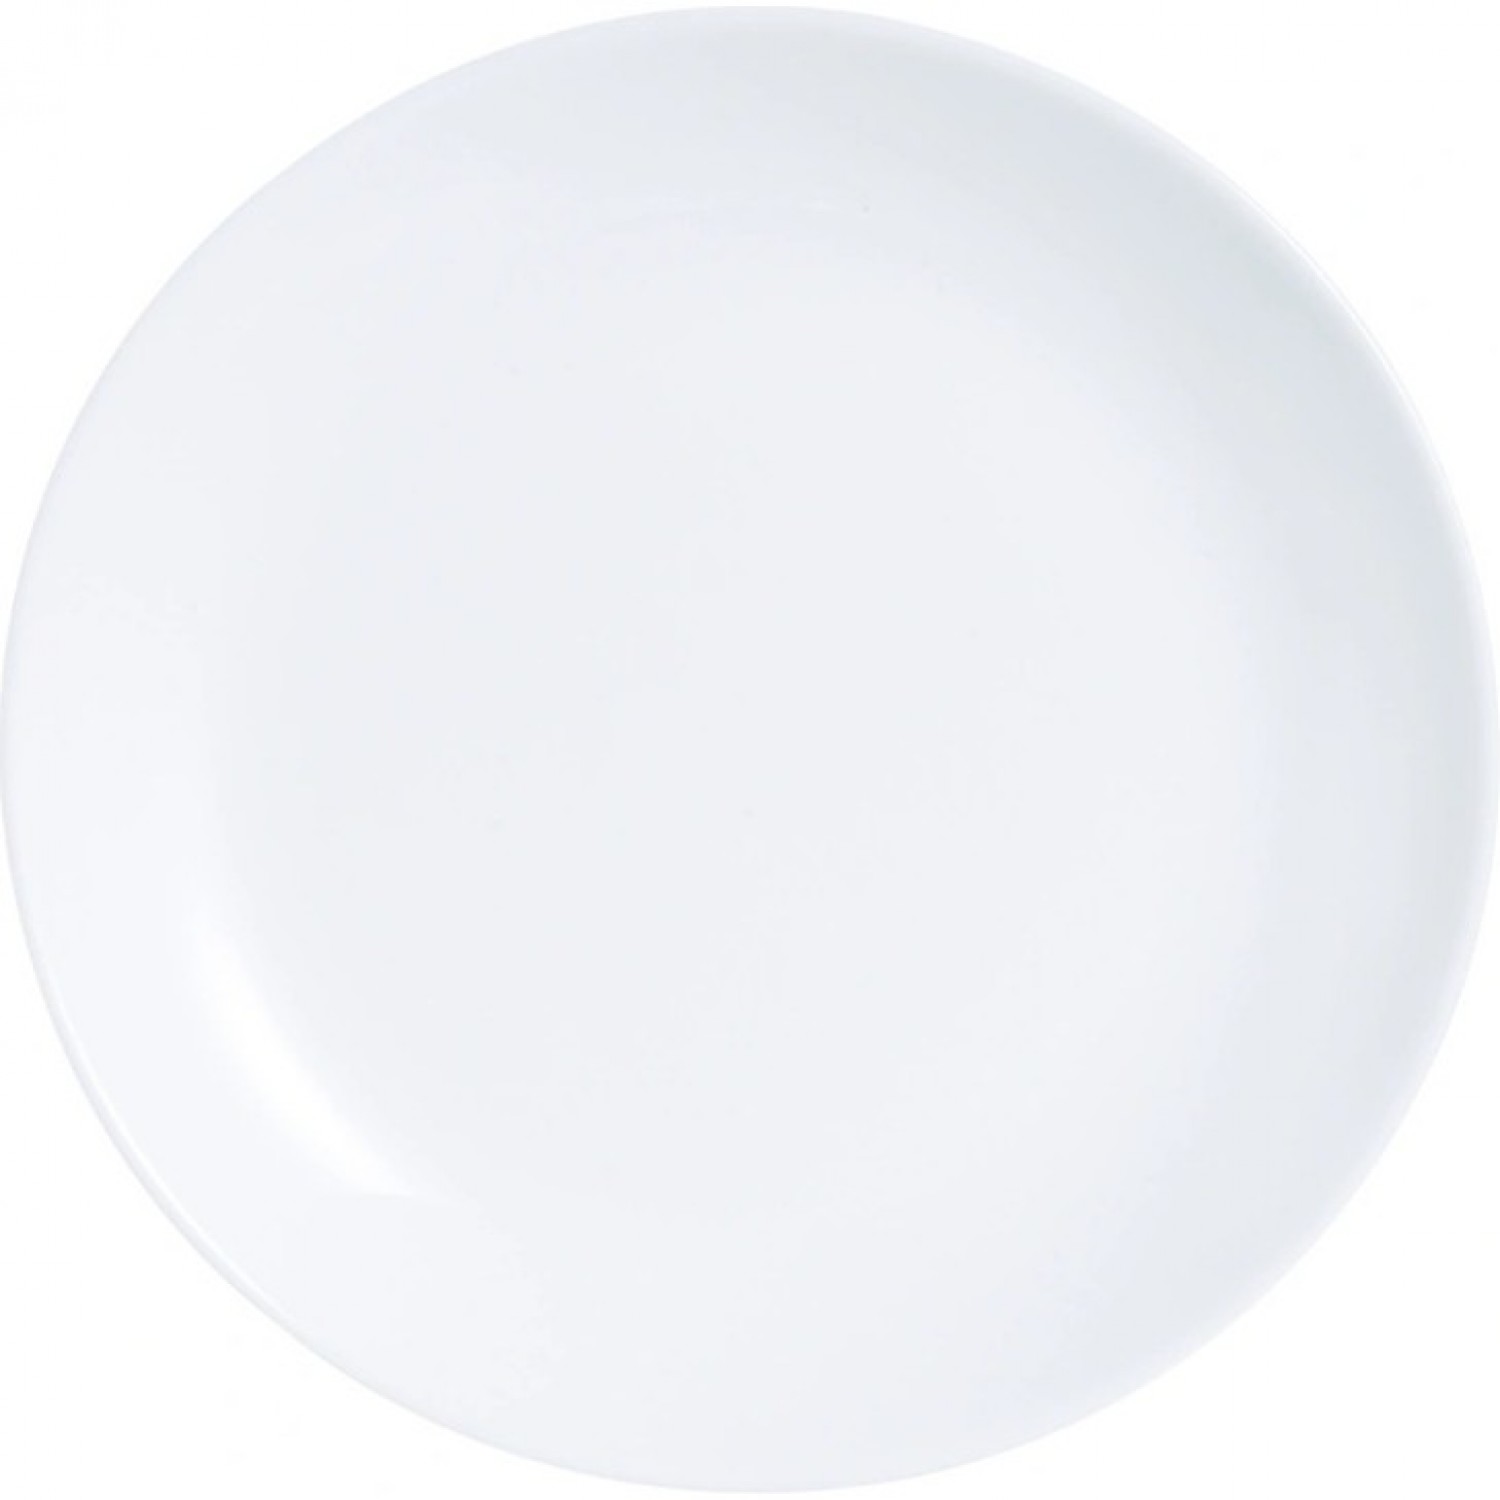 Тарелка обеденная ДИВАЛИ 25см LUMINARC D6905 (P3299) тарелка обеденная luminarc дивали гранит p0870 25см